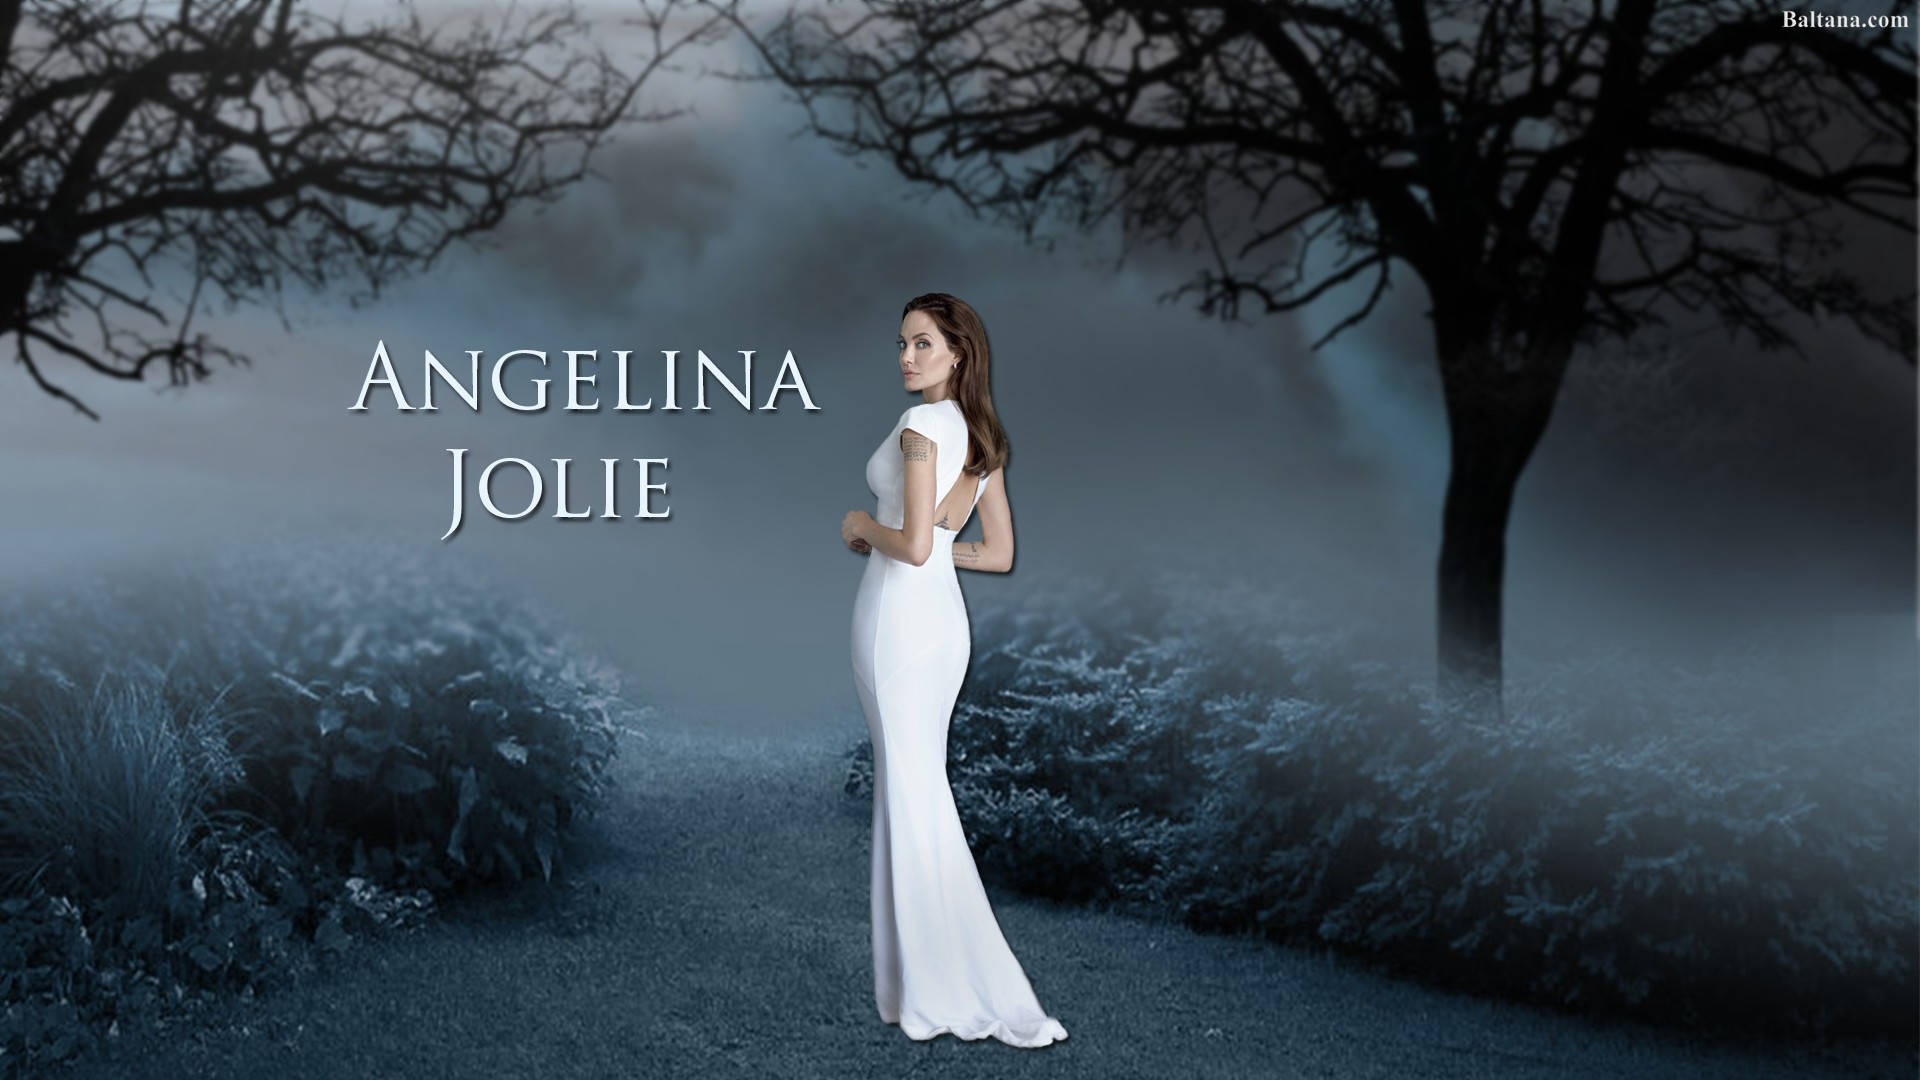 Angelina Jolie Forest Fanart Background